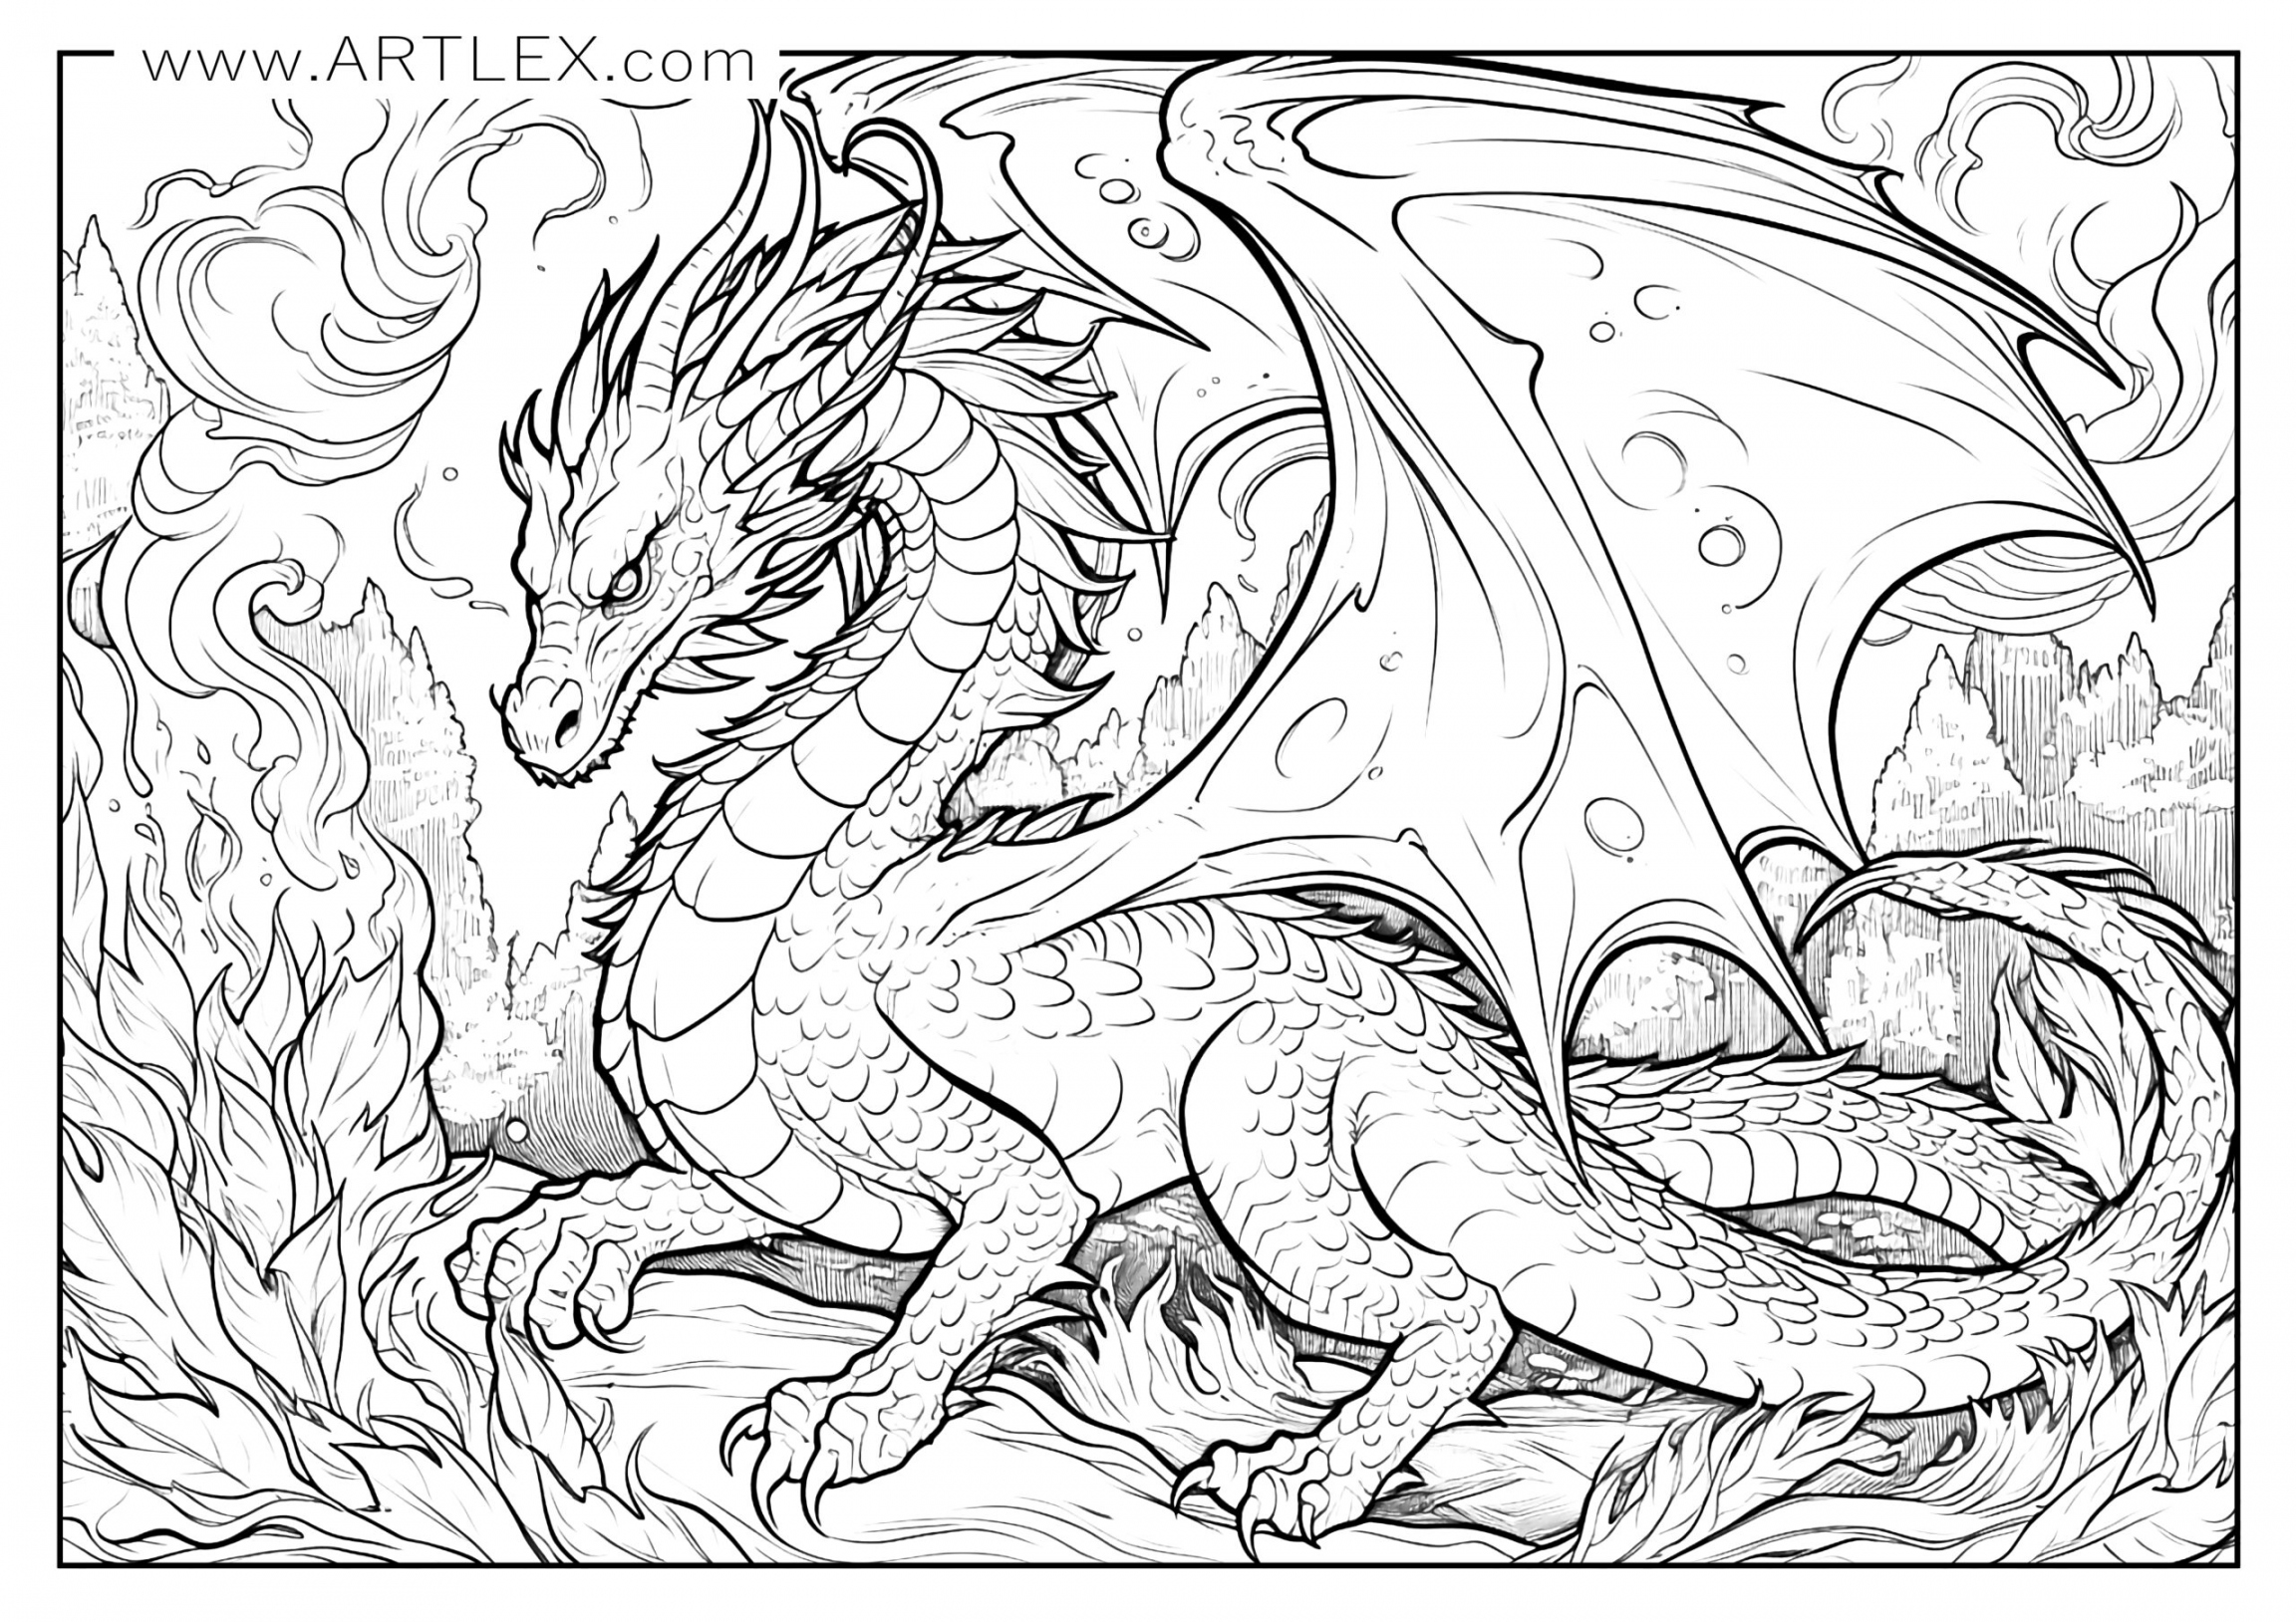 Free Printable Dragon Coloring Pages - Printable -  Free Dragon Coloring Pages (Free + Printable) – Artlex